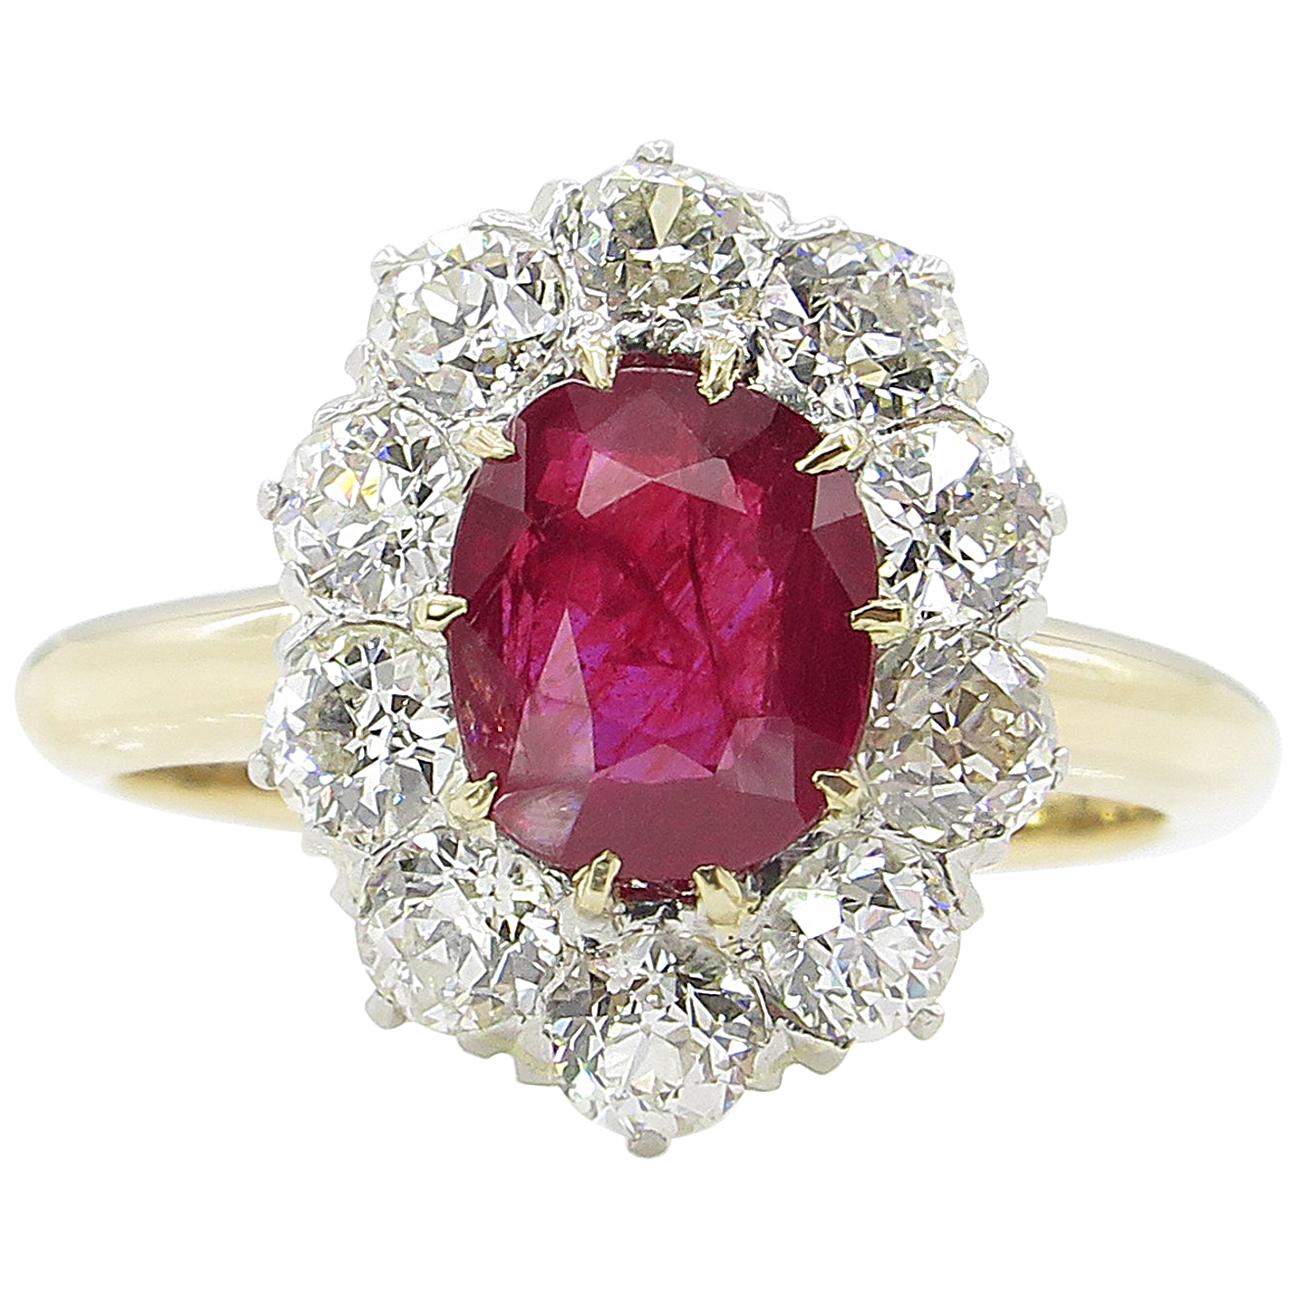 AGL 2.31 Carat Dark Red Burma Ruby Diamond Engagement Ring in Yellow Gold